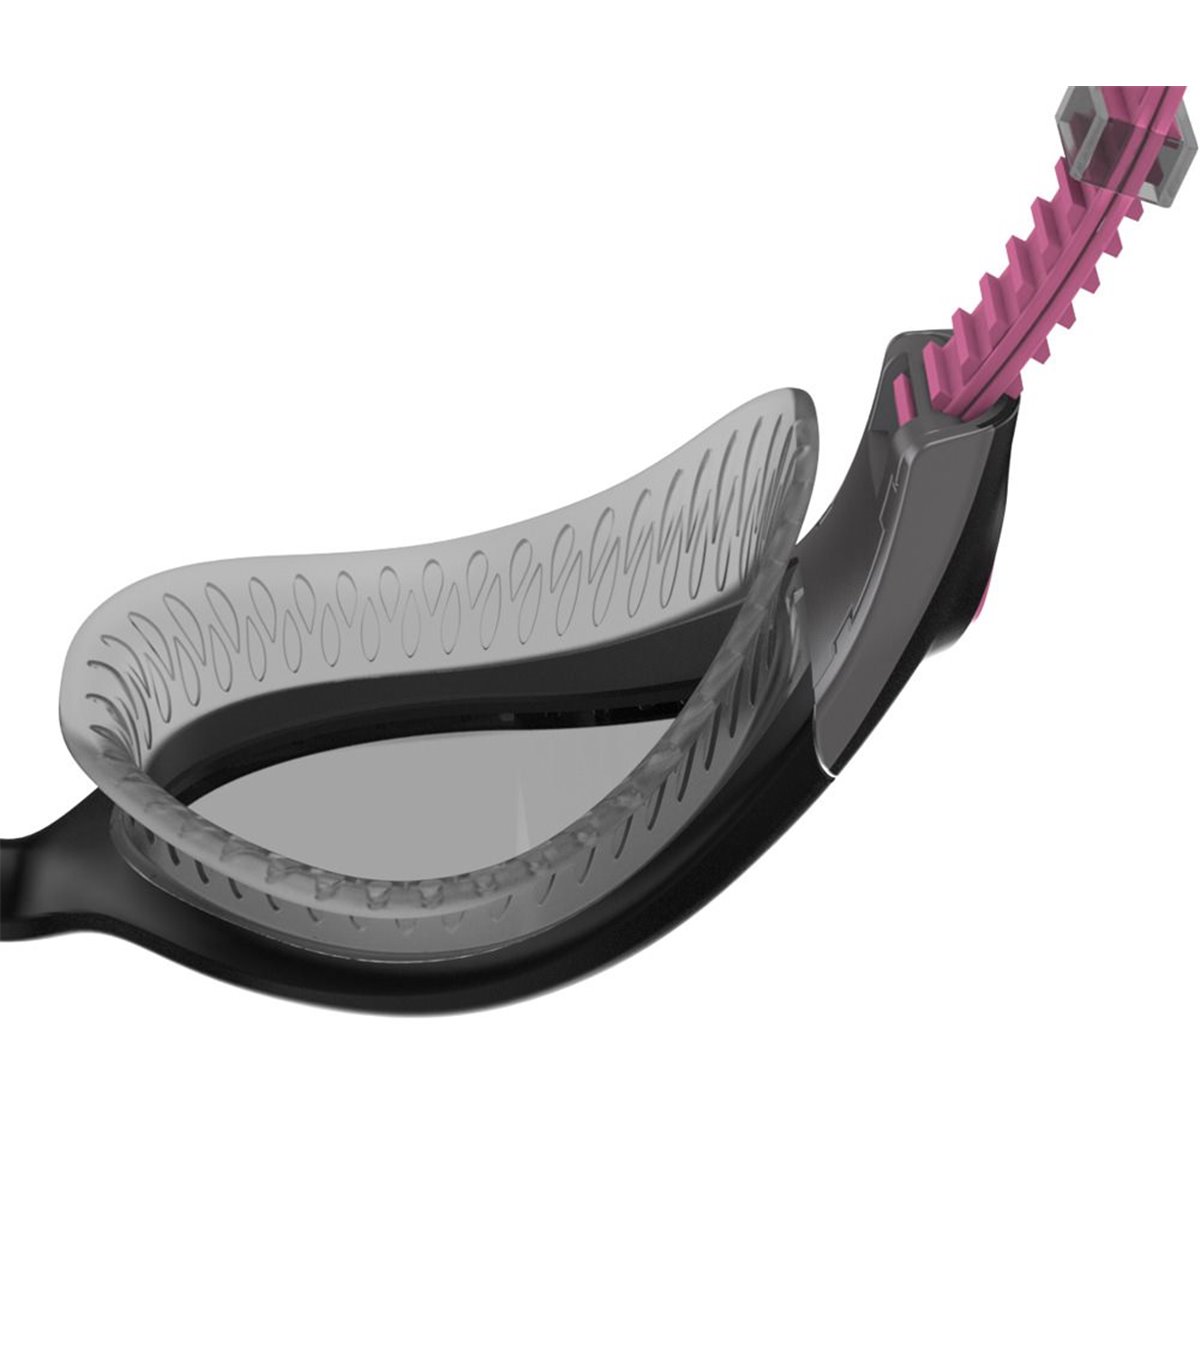 Gafas de natación Futura Biofuse Flexiseal para mujer rosa